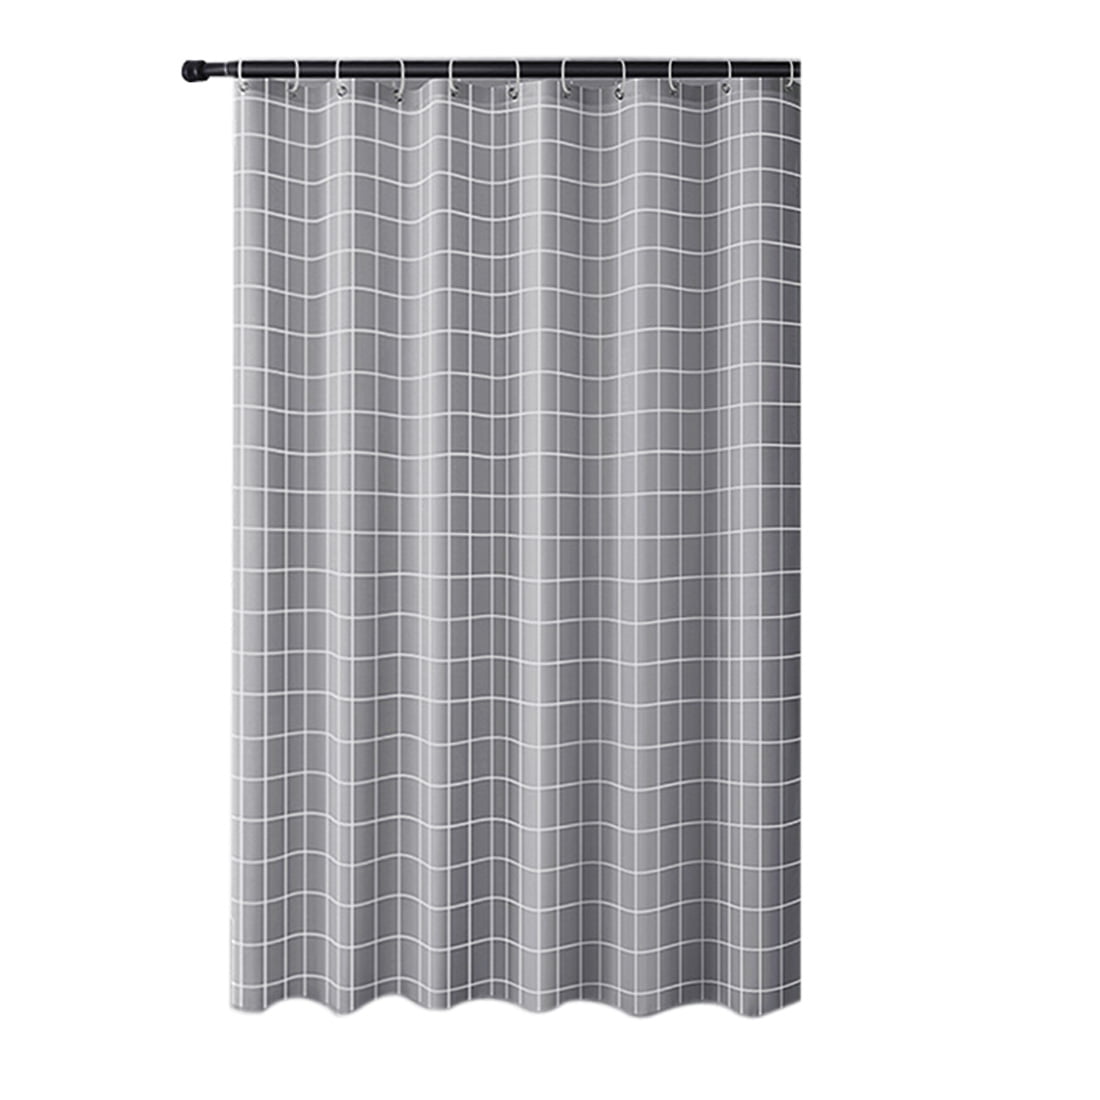 Funny husky dog Shower Curtain Home Bathroom Decor Fabric & 12hooks 71*71inches 